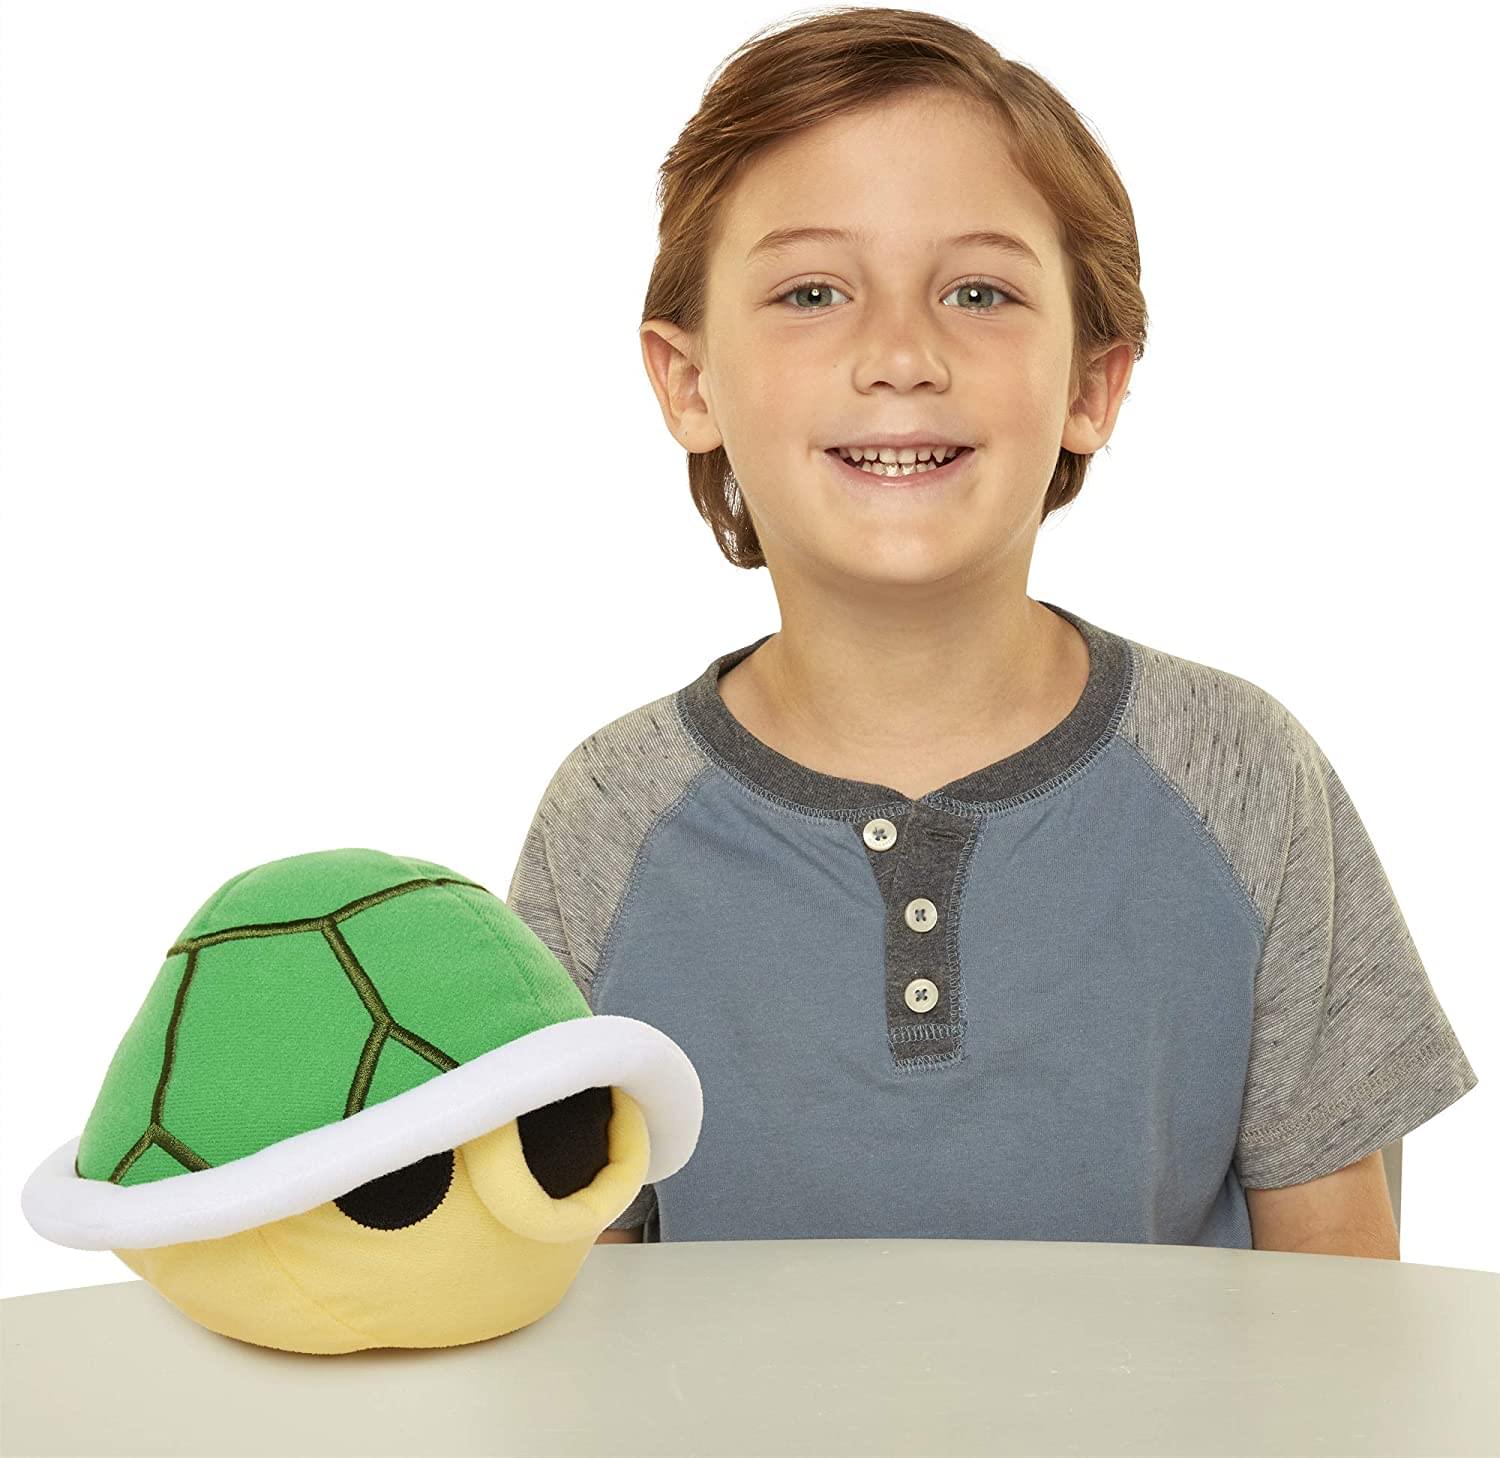 Super Mario Bros. 8 Inch Turtle Shell Plush with Sound